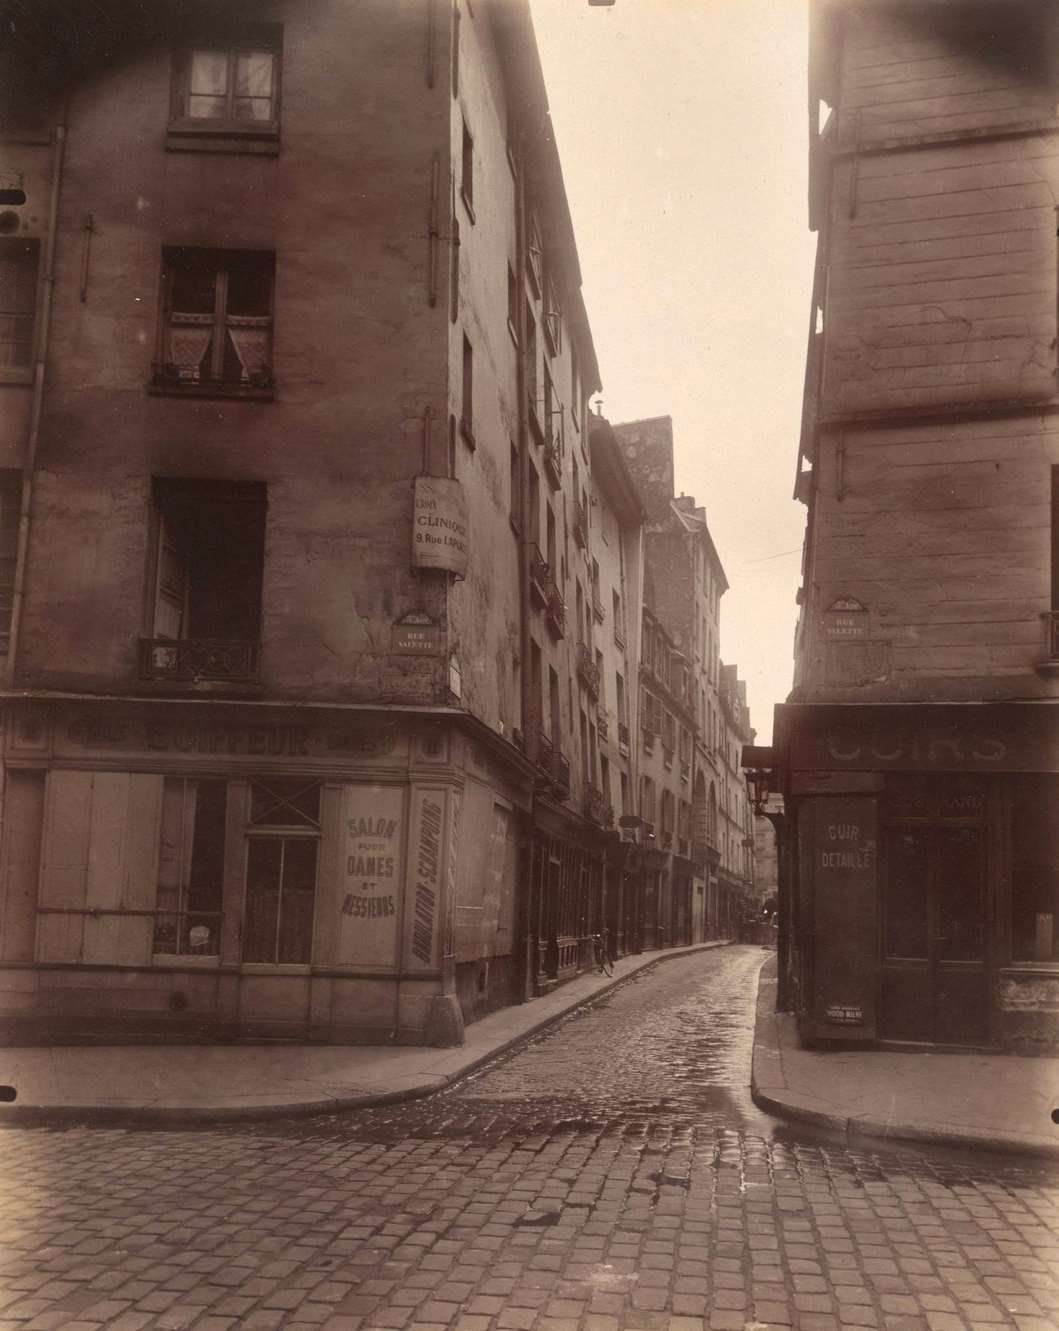 Rue Laplace and Rue Valette, Paris, 1926